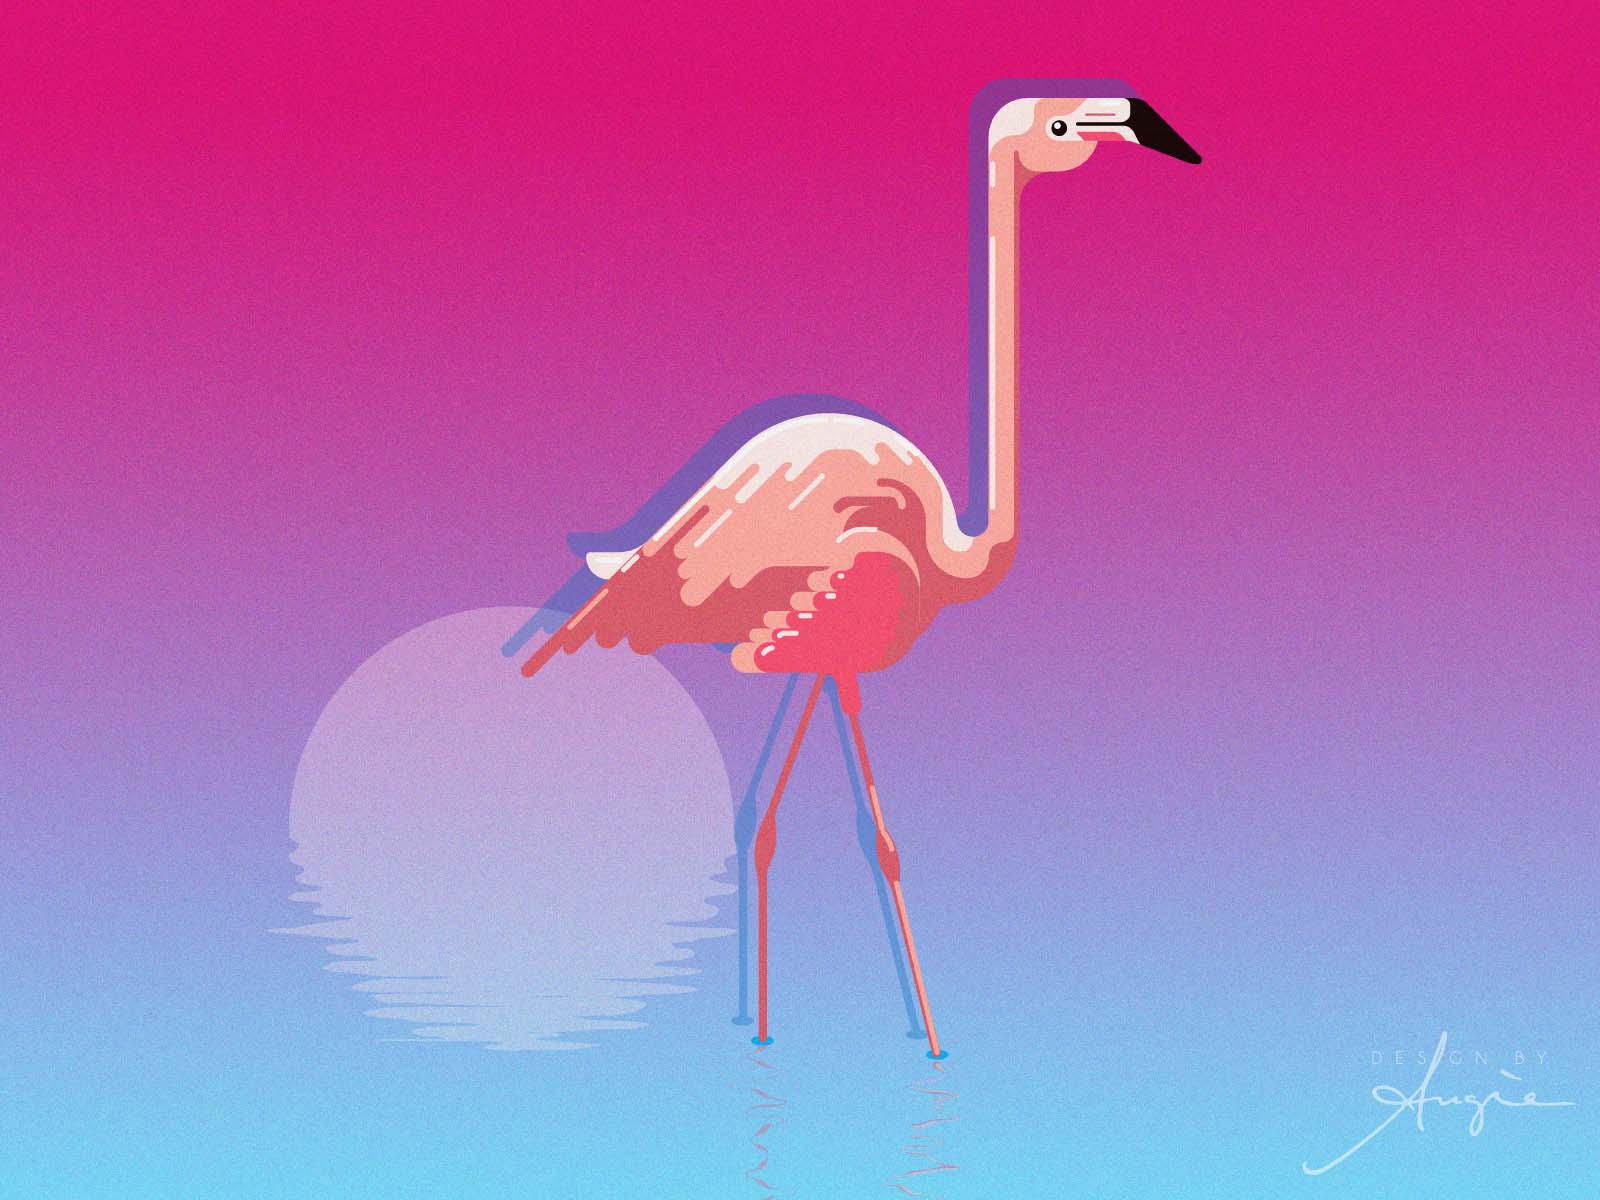 The Pink Flamingo